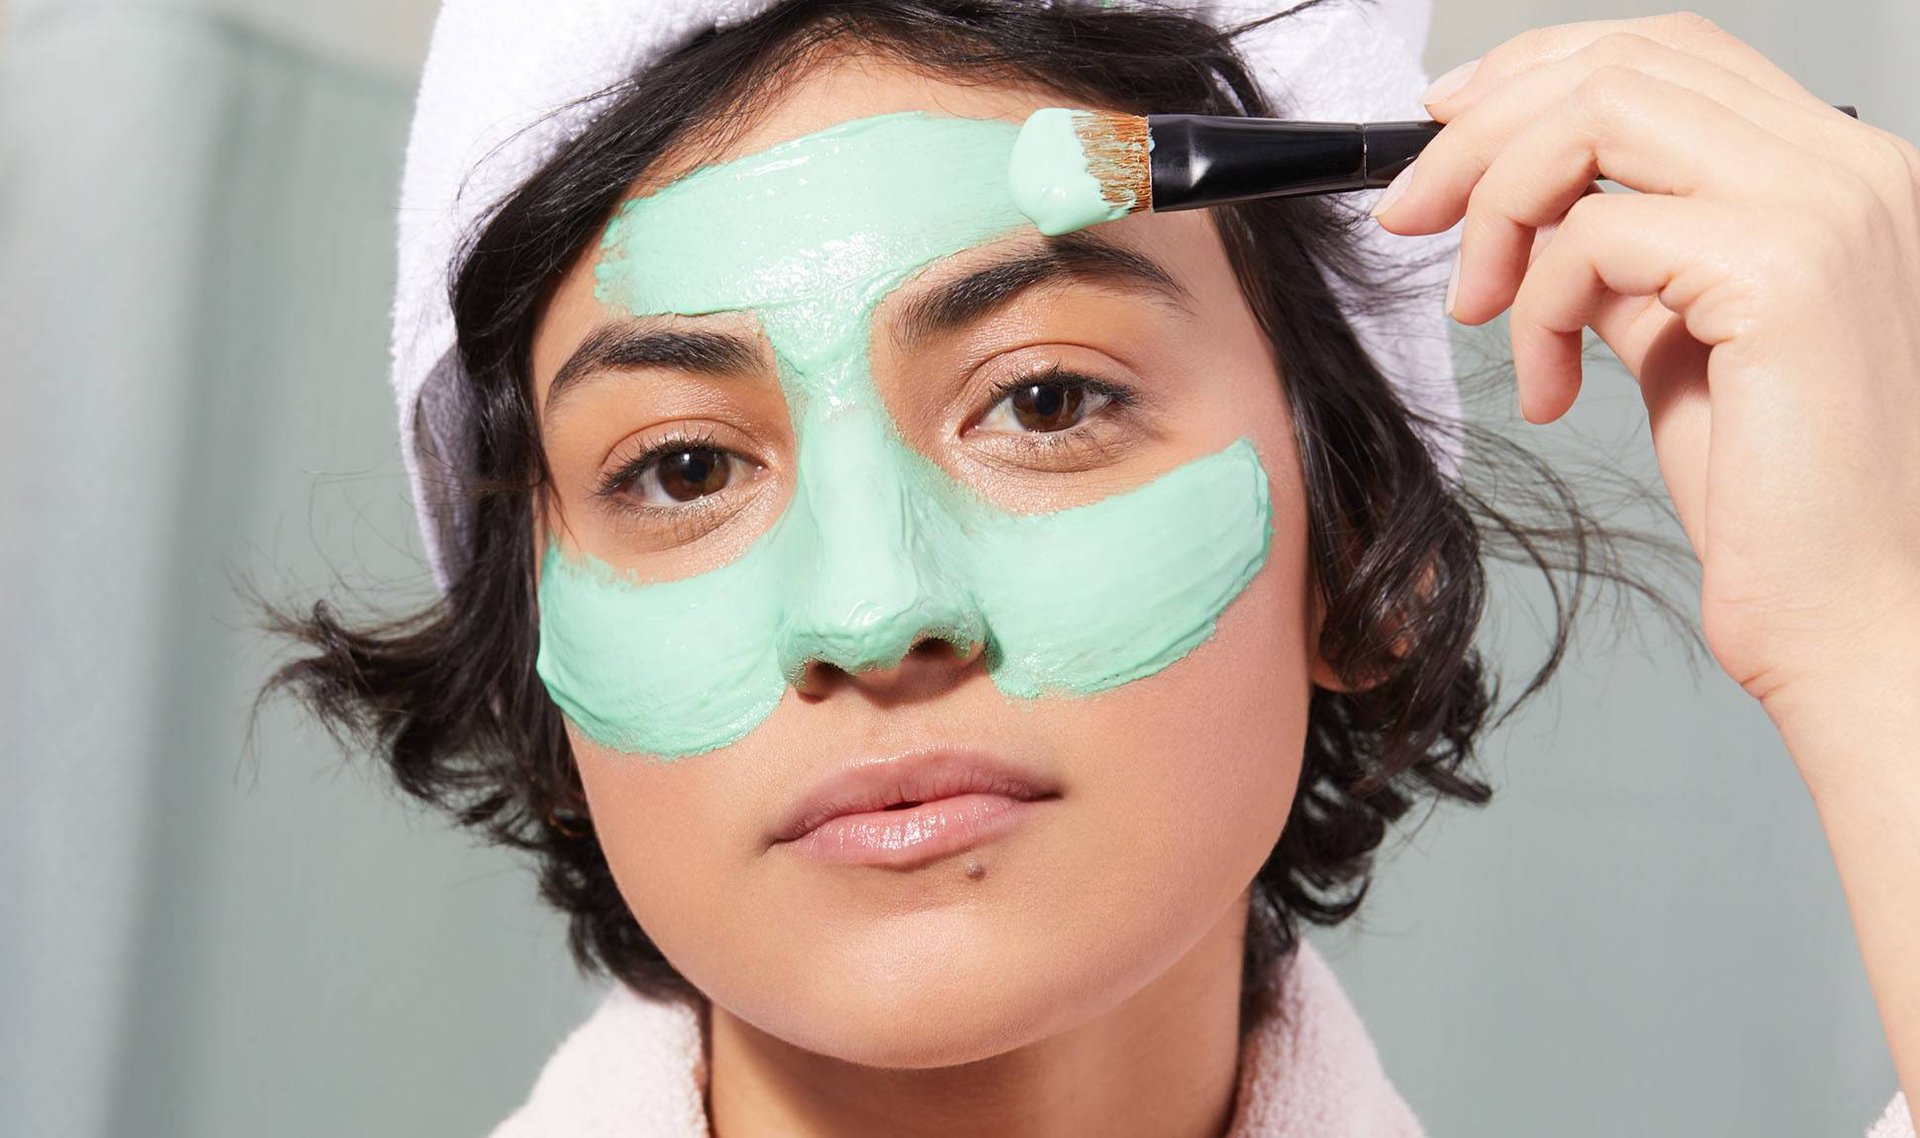 7 Steps For a DIY Facial At Home